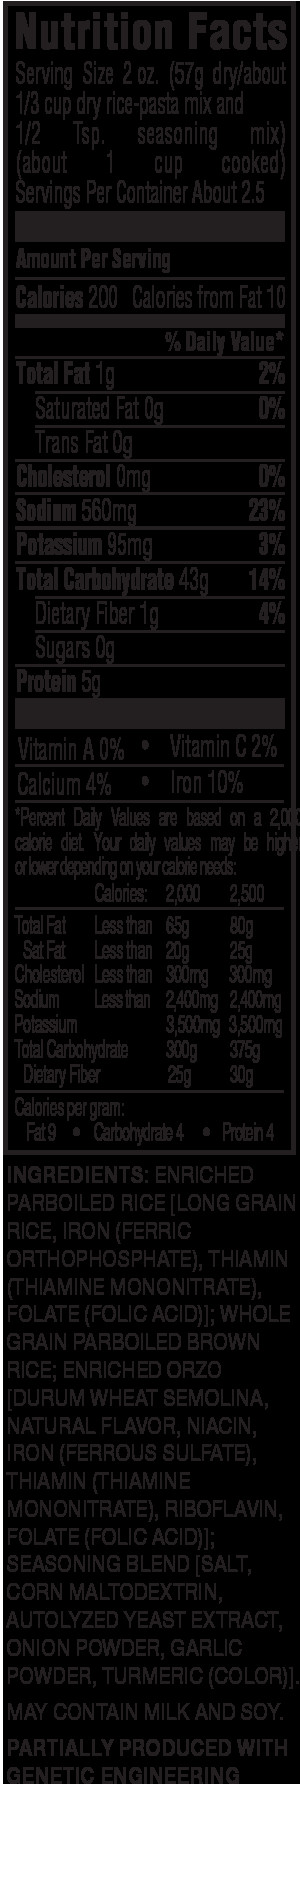 Rice Pilaf Calories
 UNCLE BEN S Products